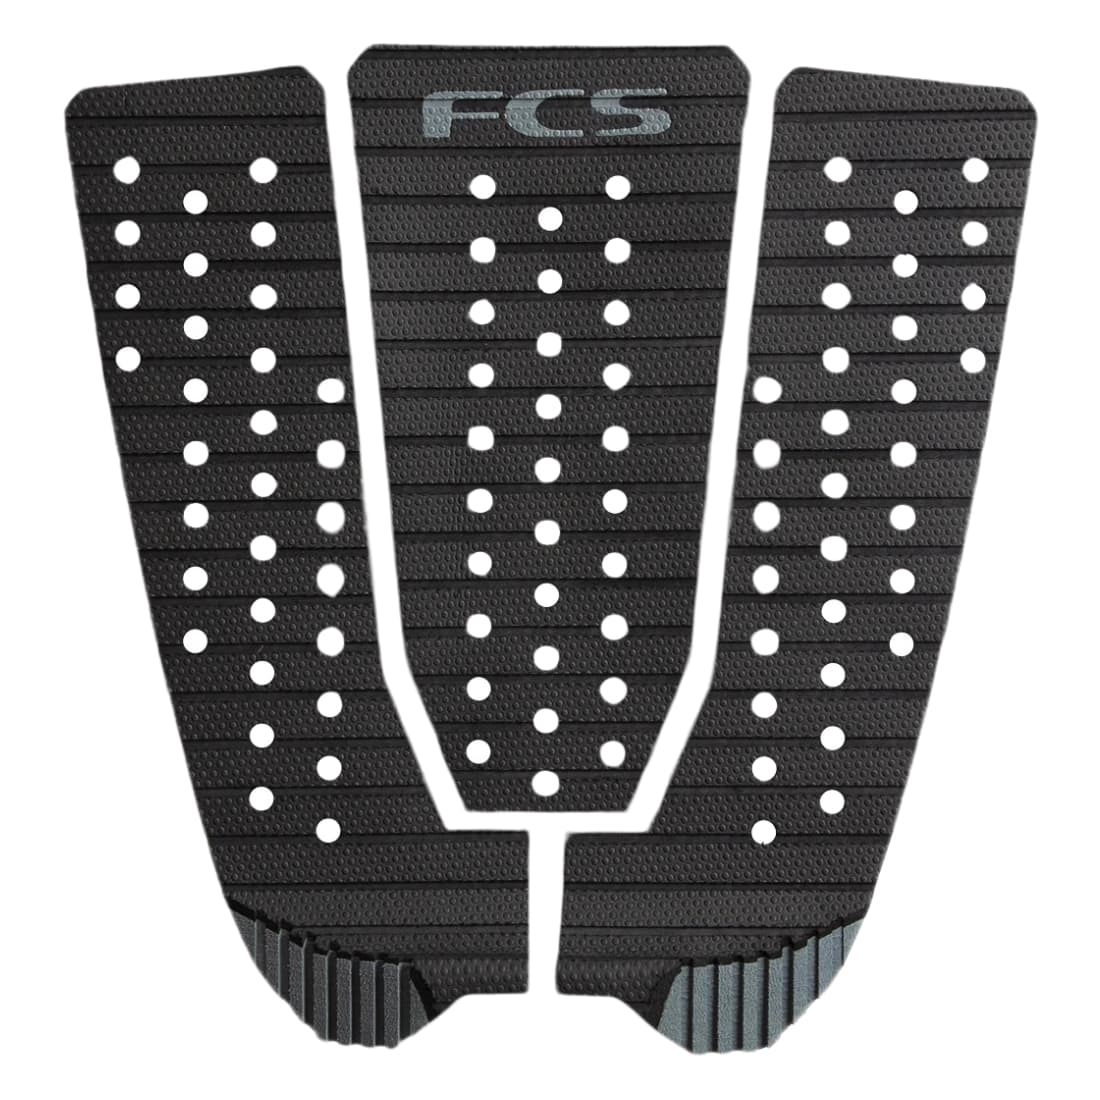 FCS Kolohe Andino Tread-Lite 3 Piece Surfboard Tail Pad - Black/Charcoal